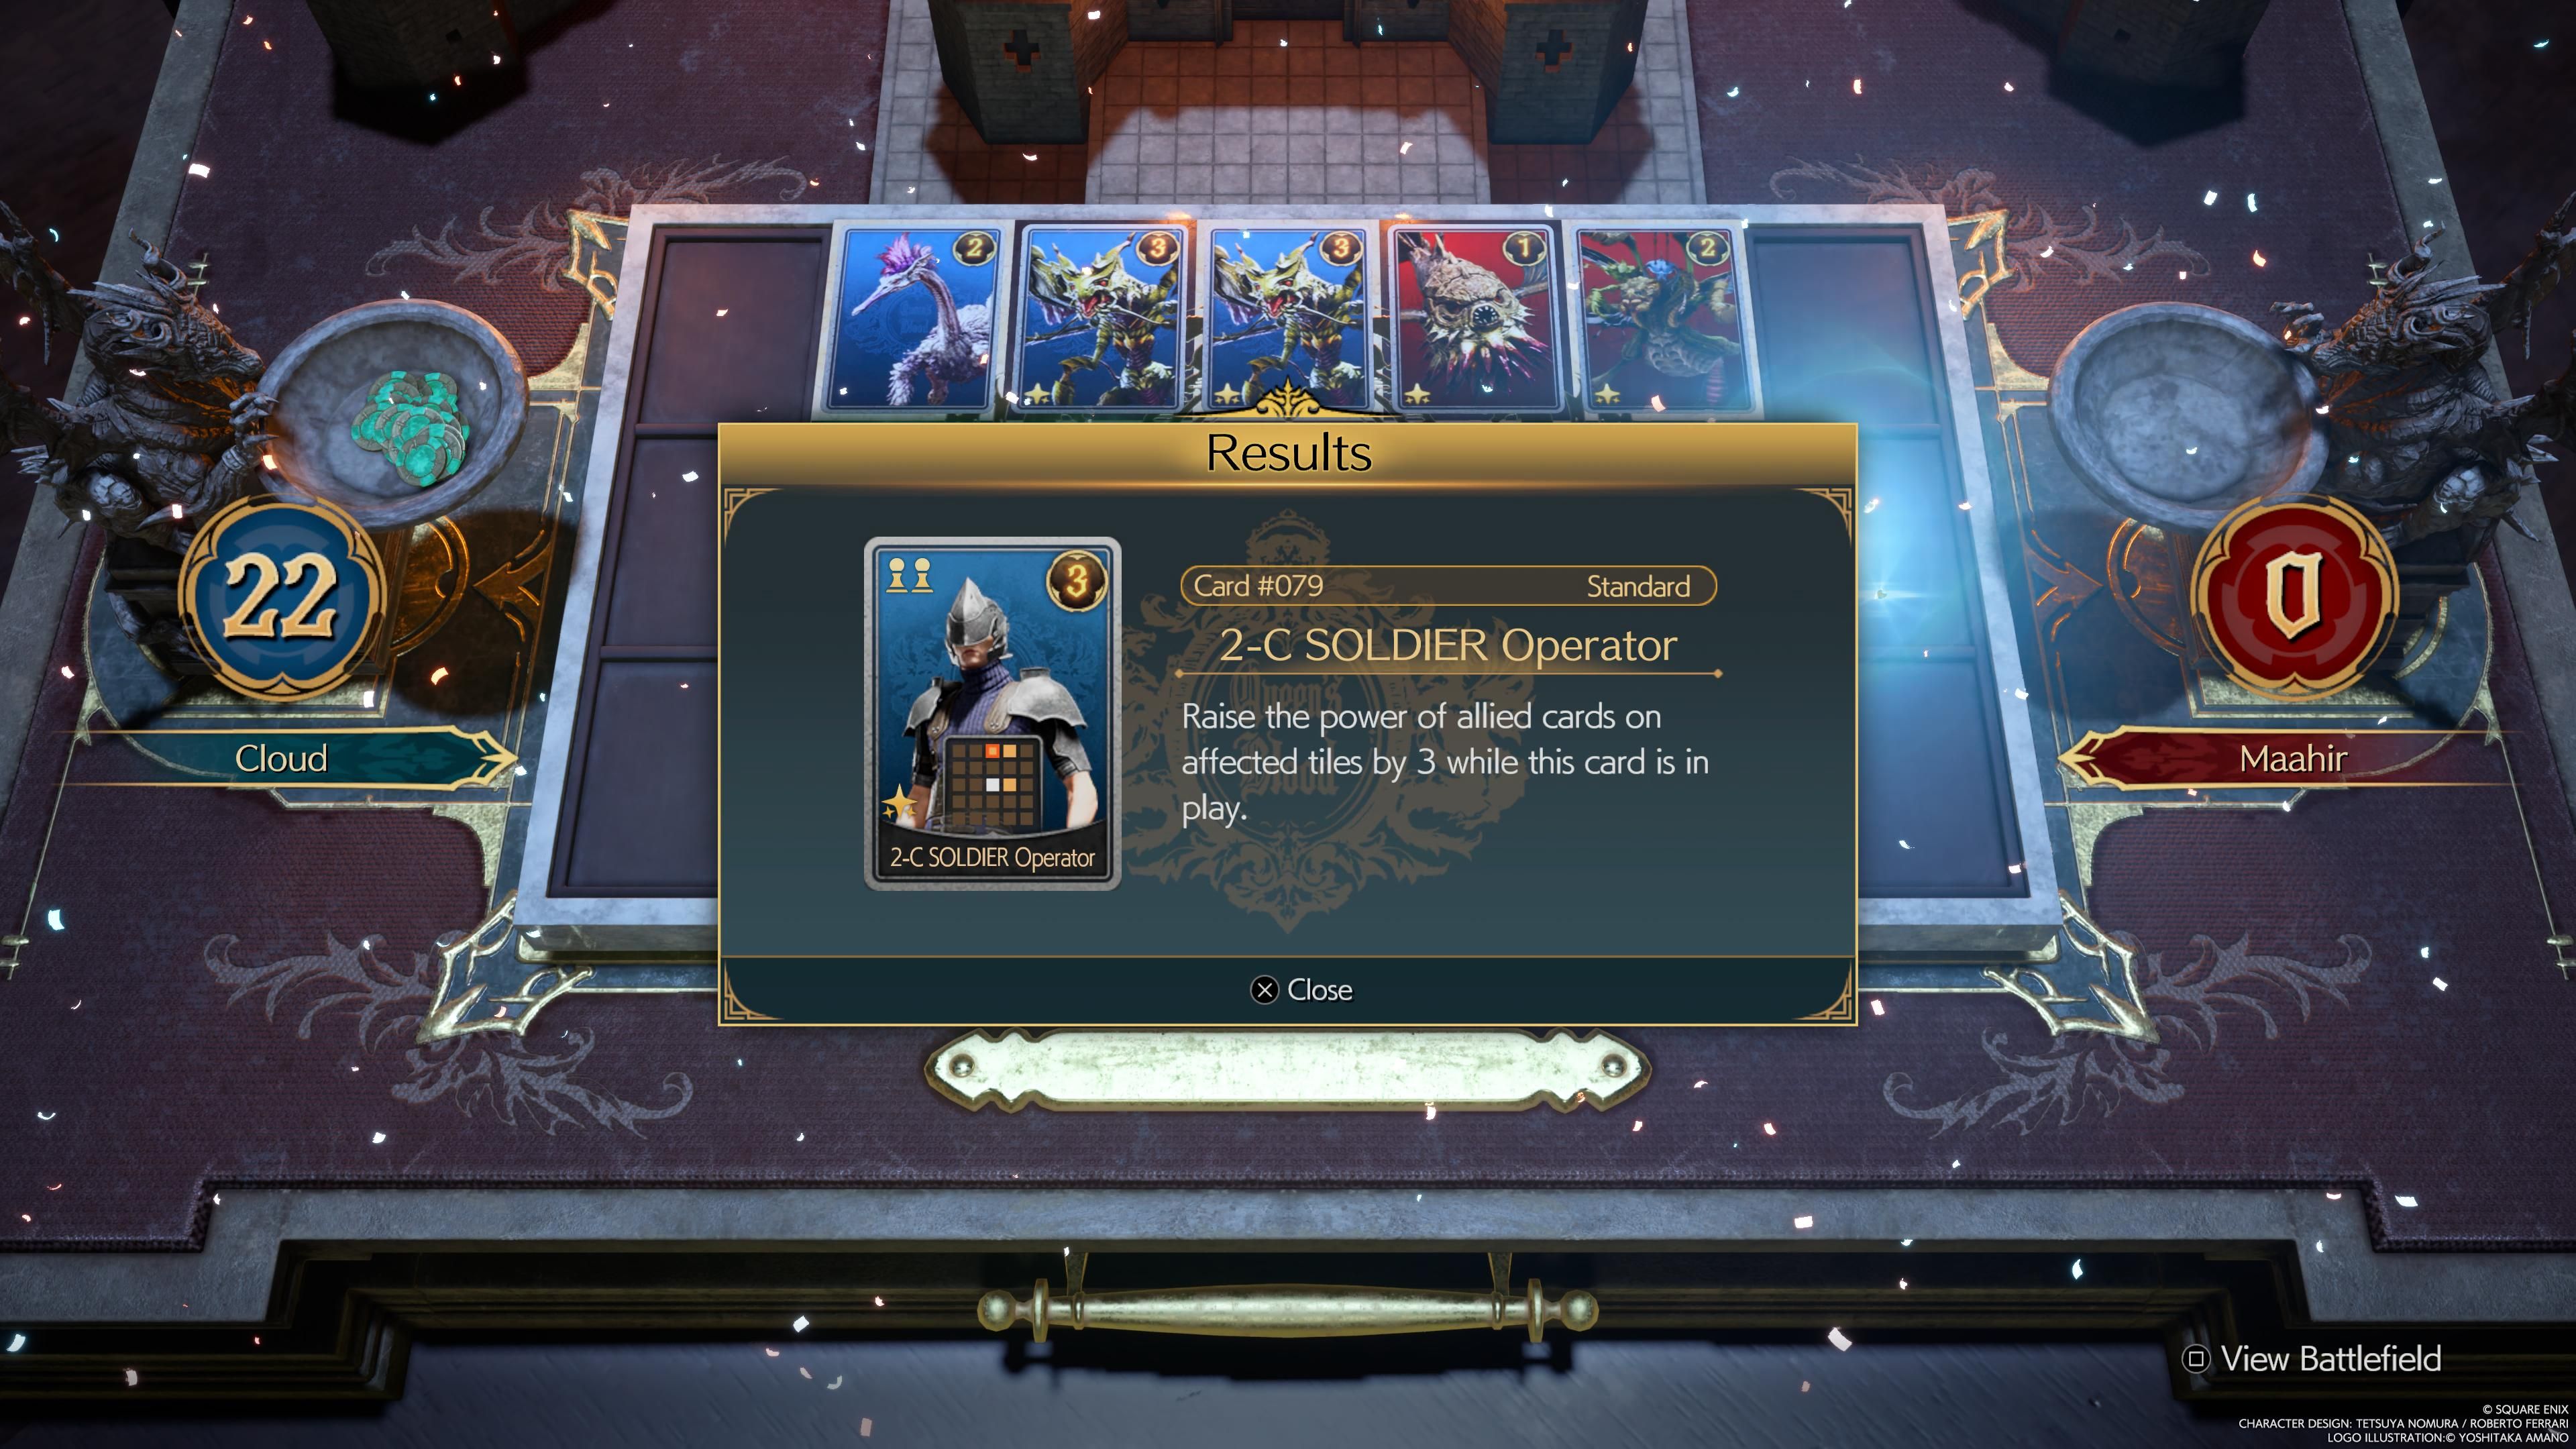 2-C SOLDIER Operator Reward for defeating Maahir Final Fantasy 7 Rebirth